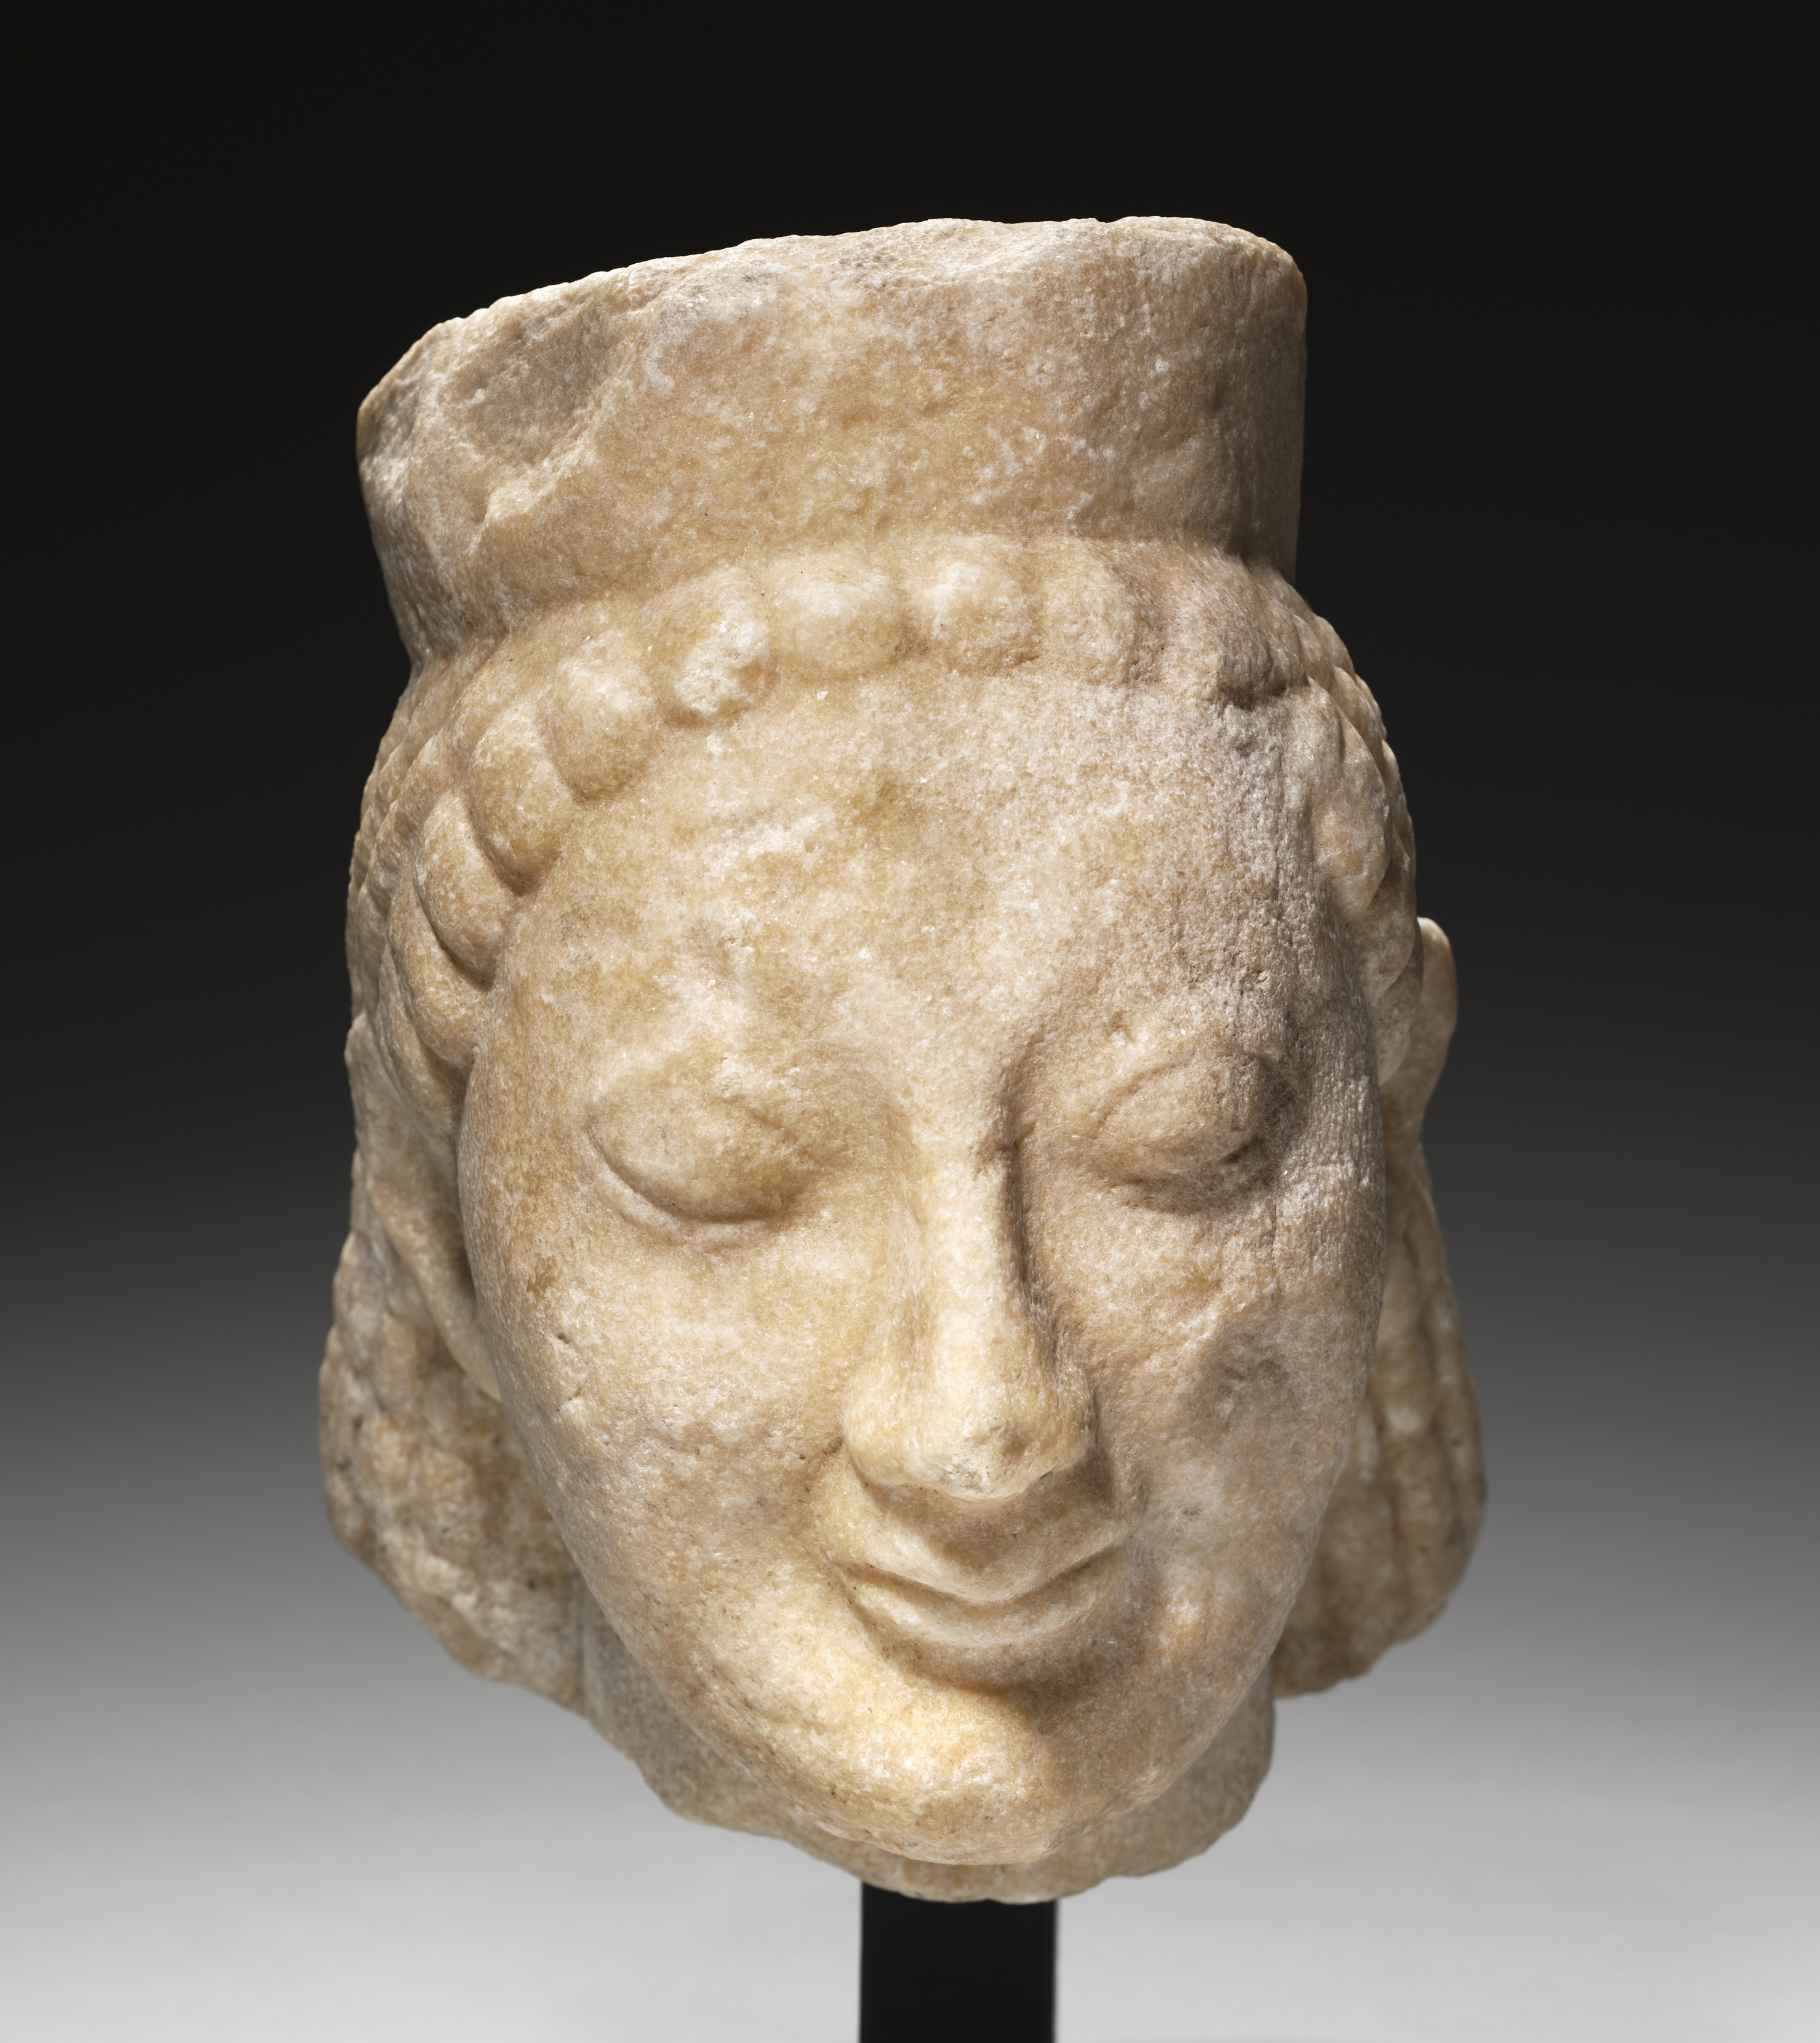 SPHINX - Woman-Headed Lion of Greek Mythology